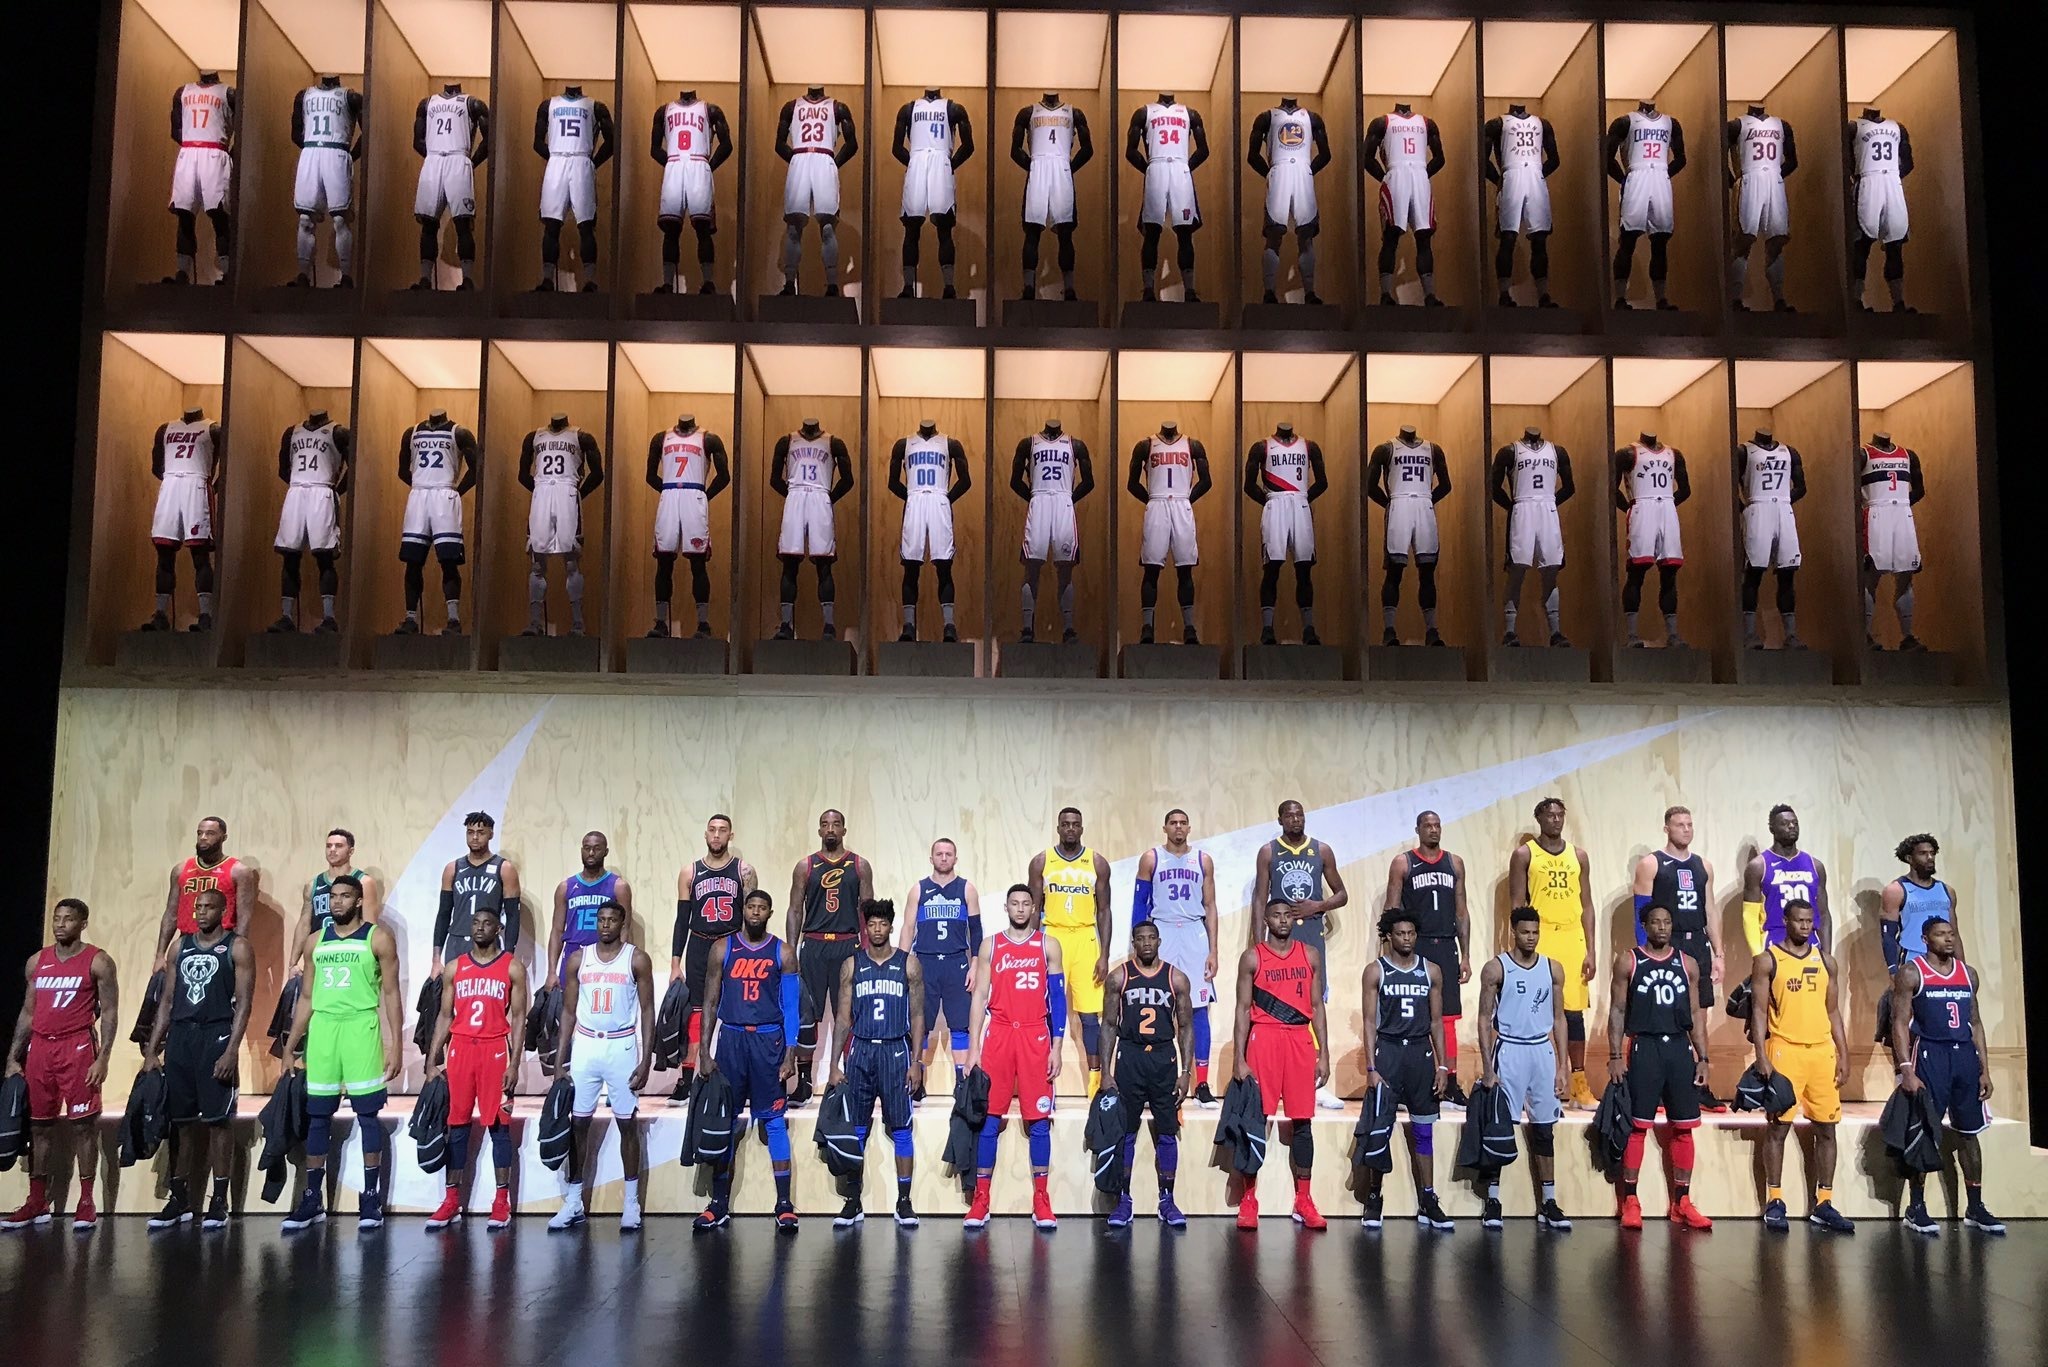 NBA, Nike unveil new uniforms for 2017-18 season